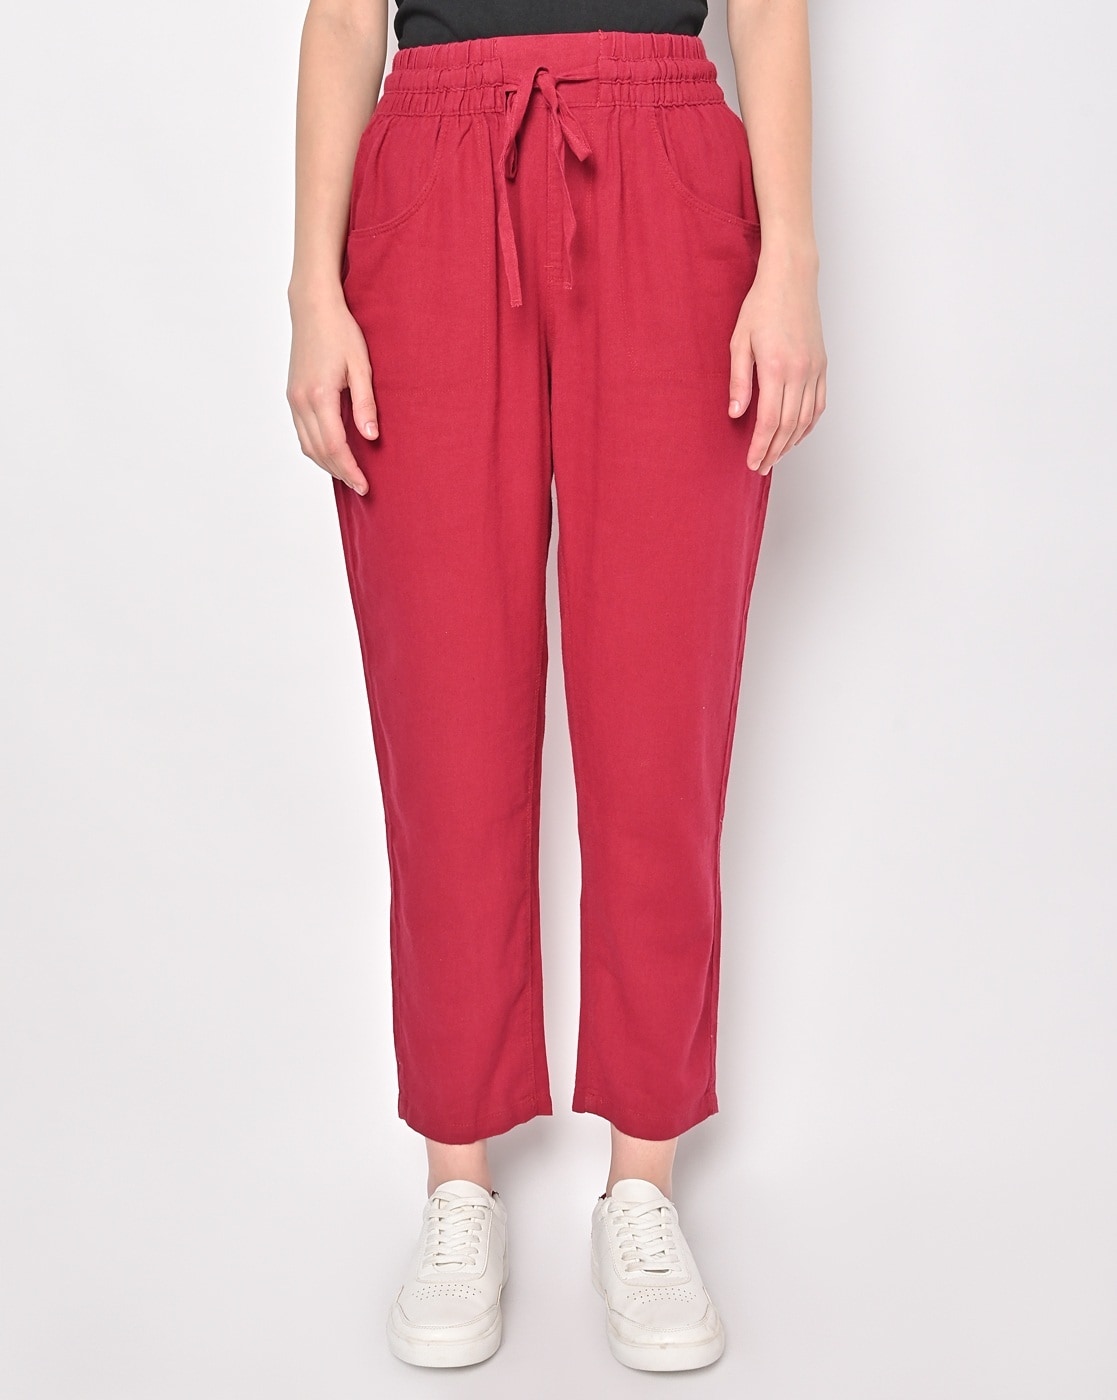 Buy Red linen trousers Designer Wear  Ensemble